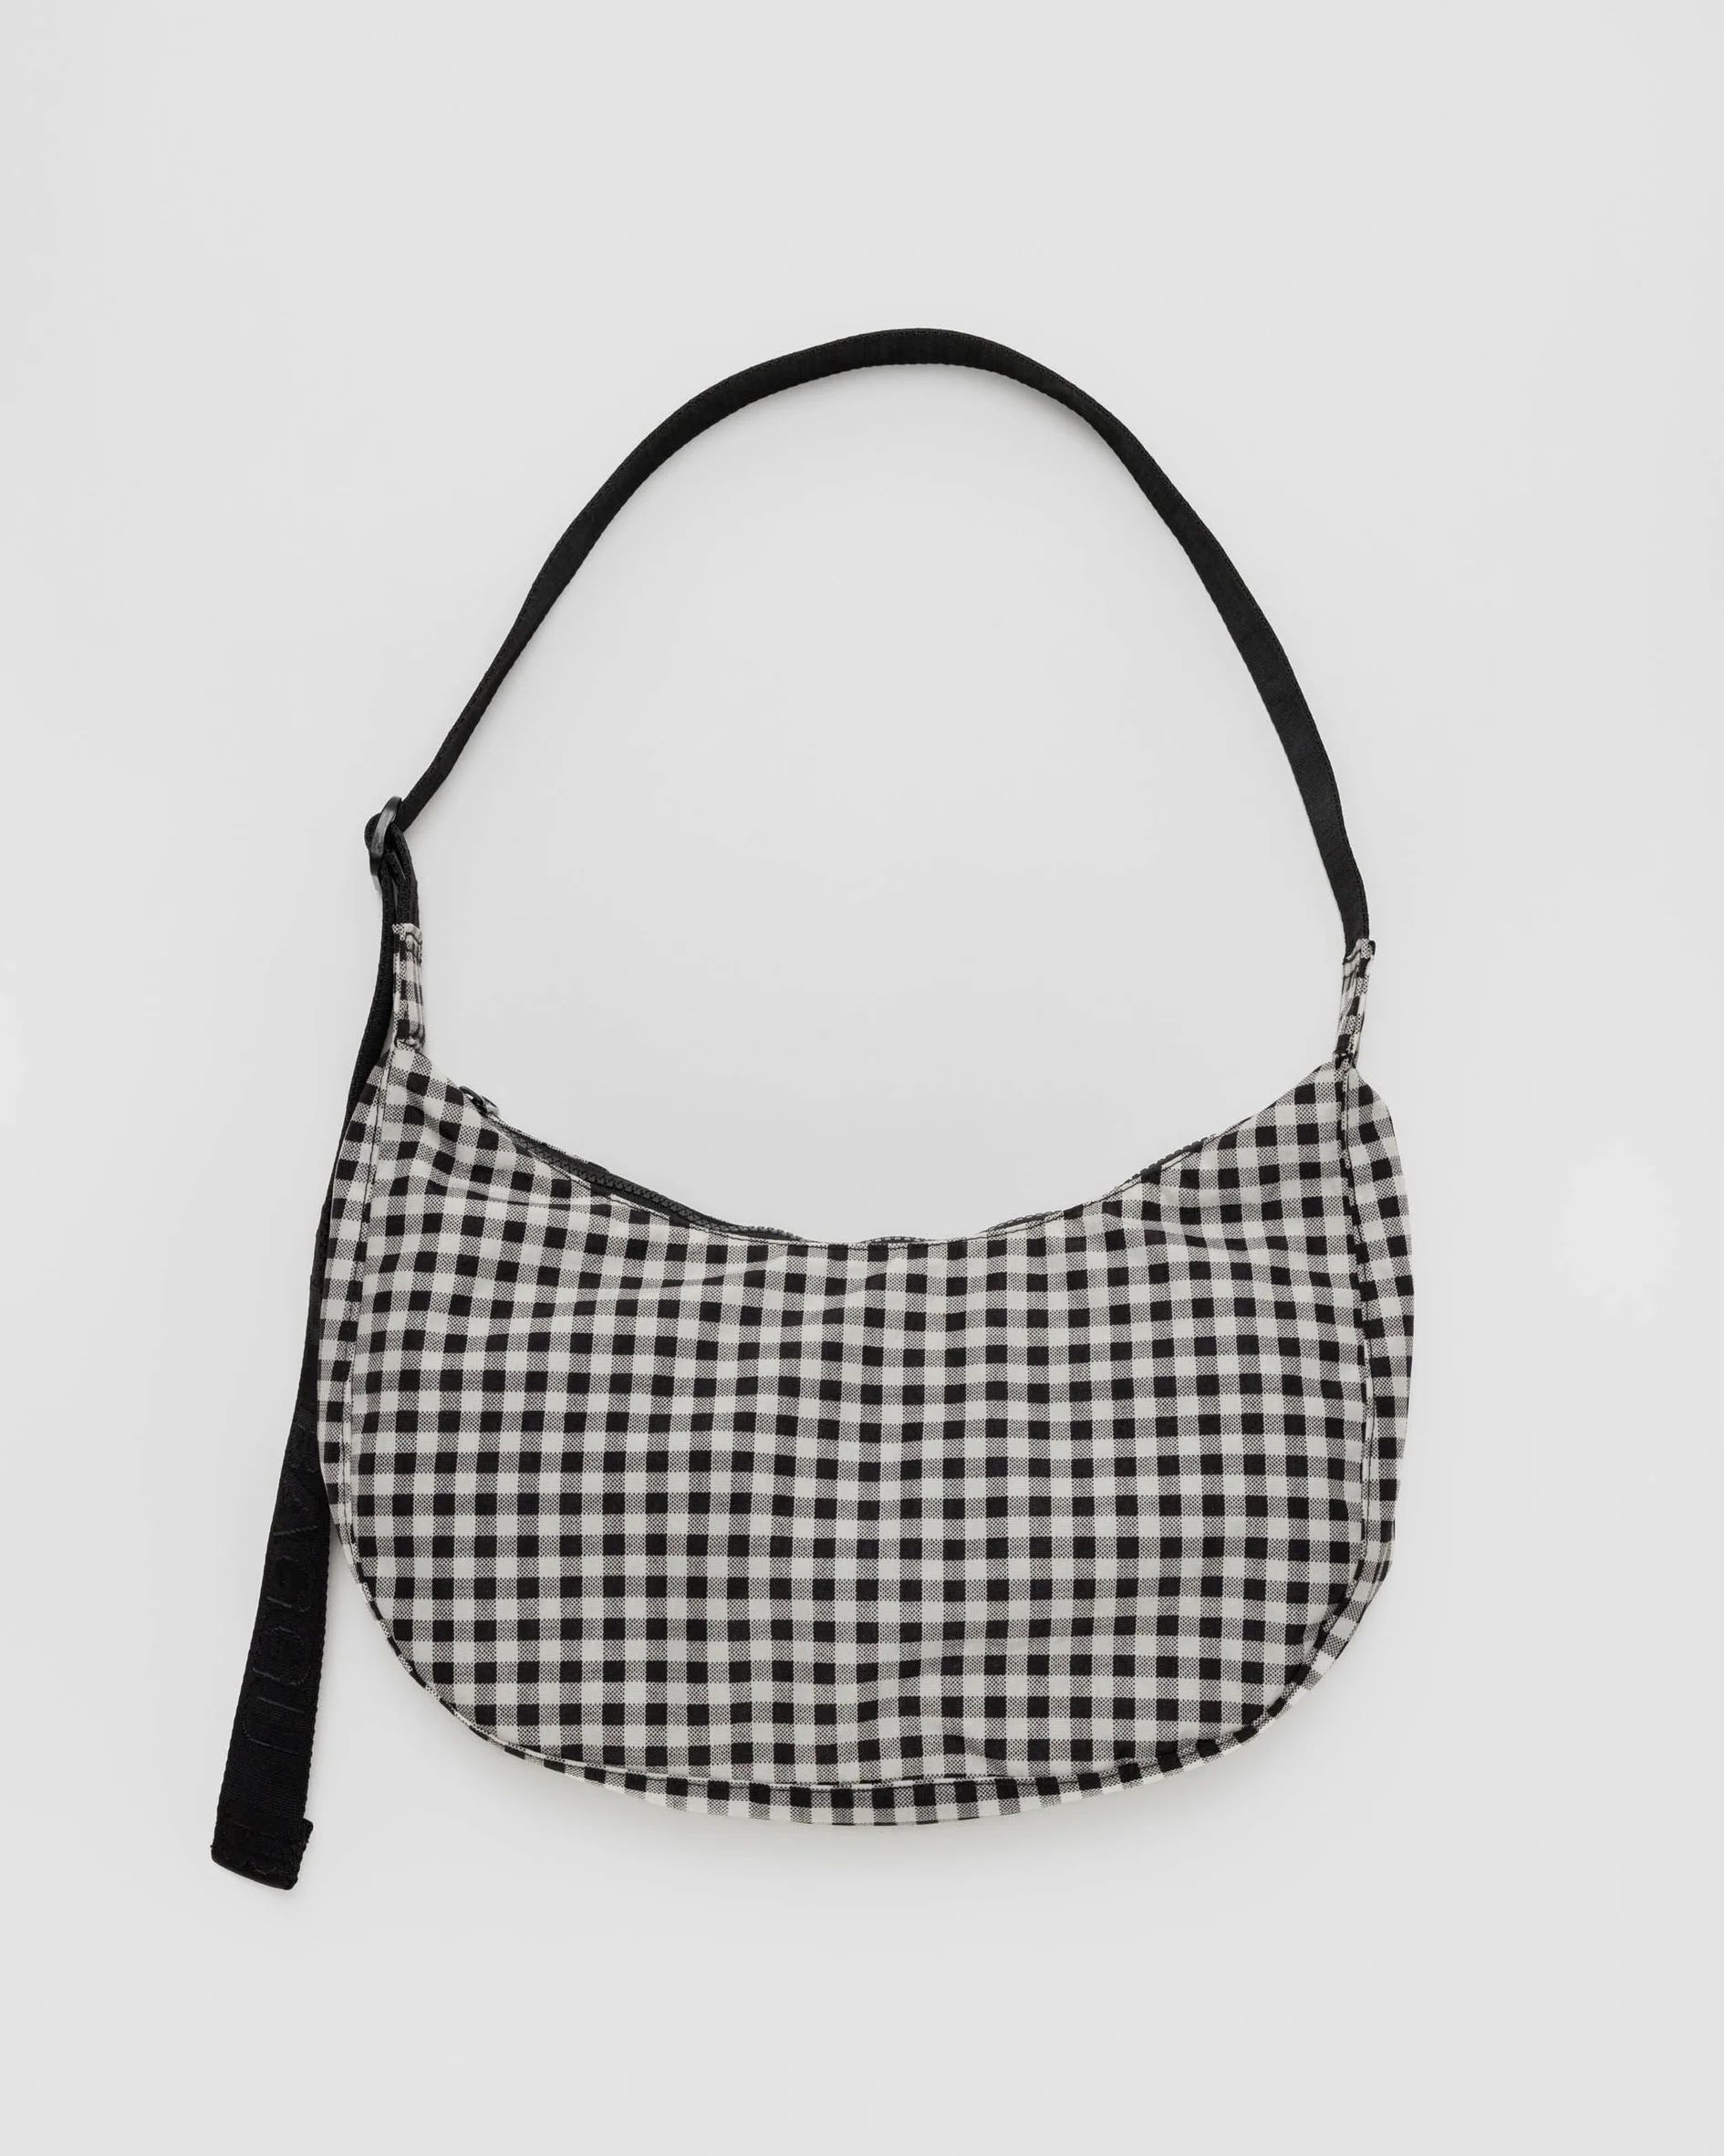 Medium Nylon Crescent Bag : Black & White Gingham - Baggu | BAGGU